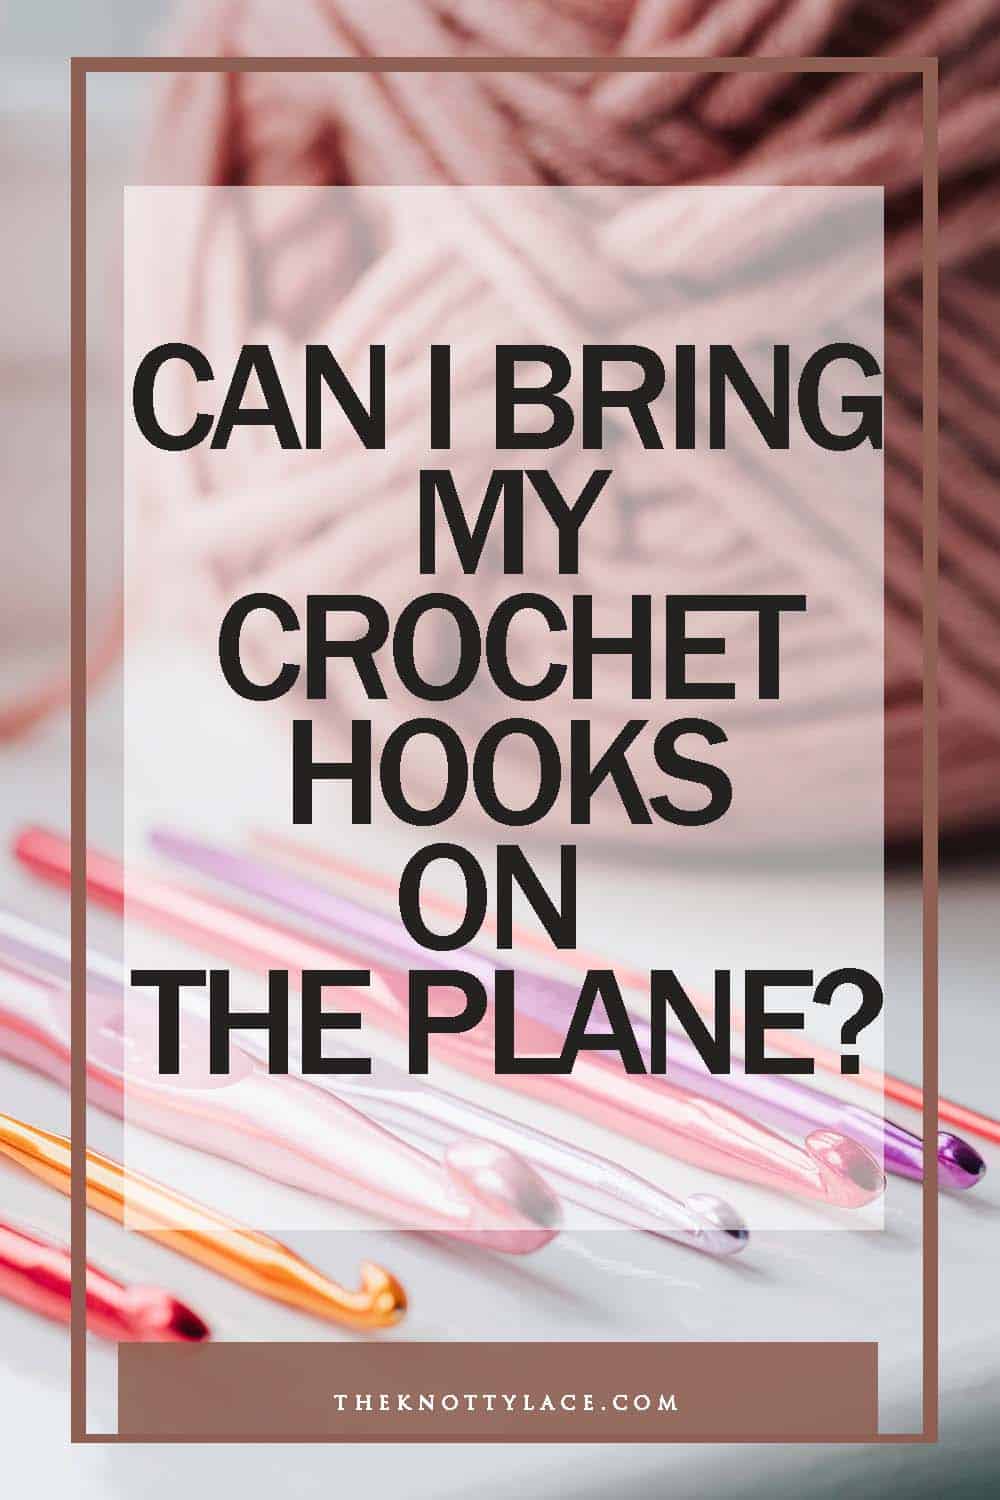 Can I bring crochet hook on plane